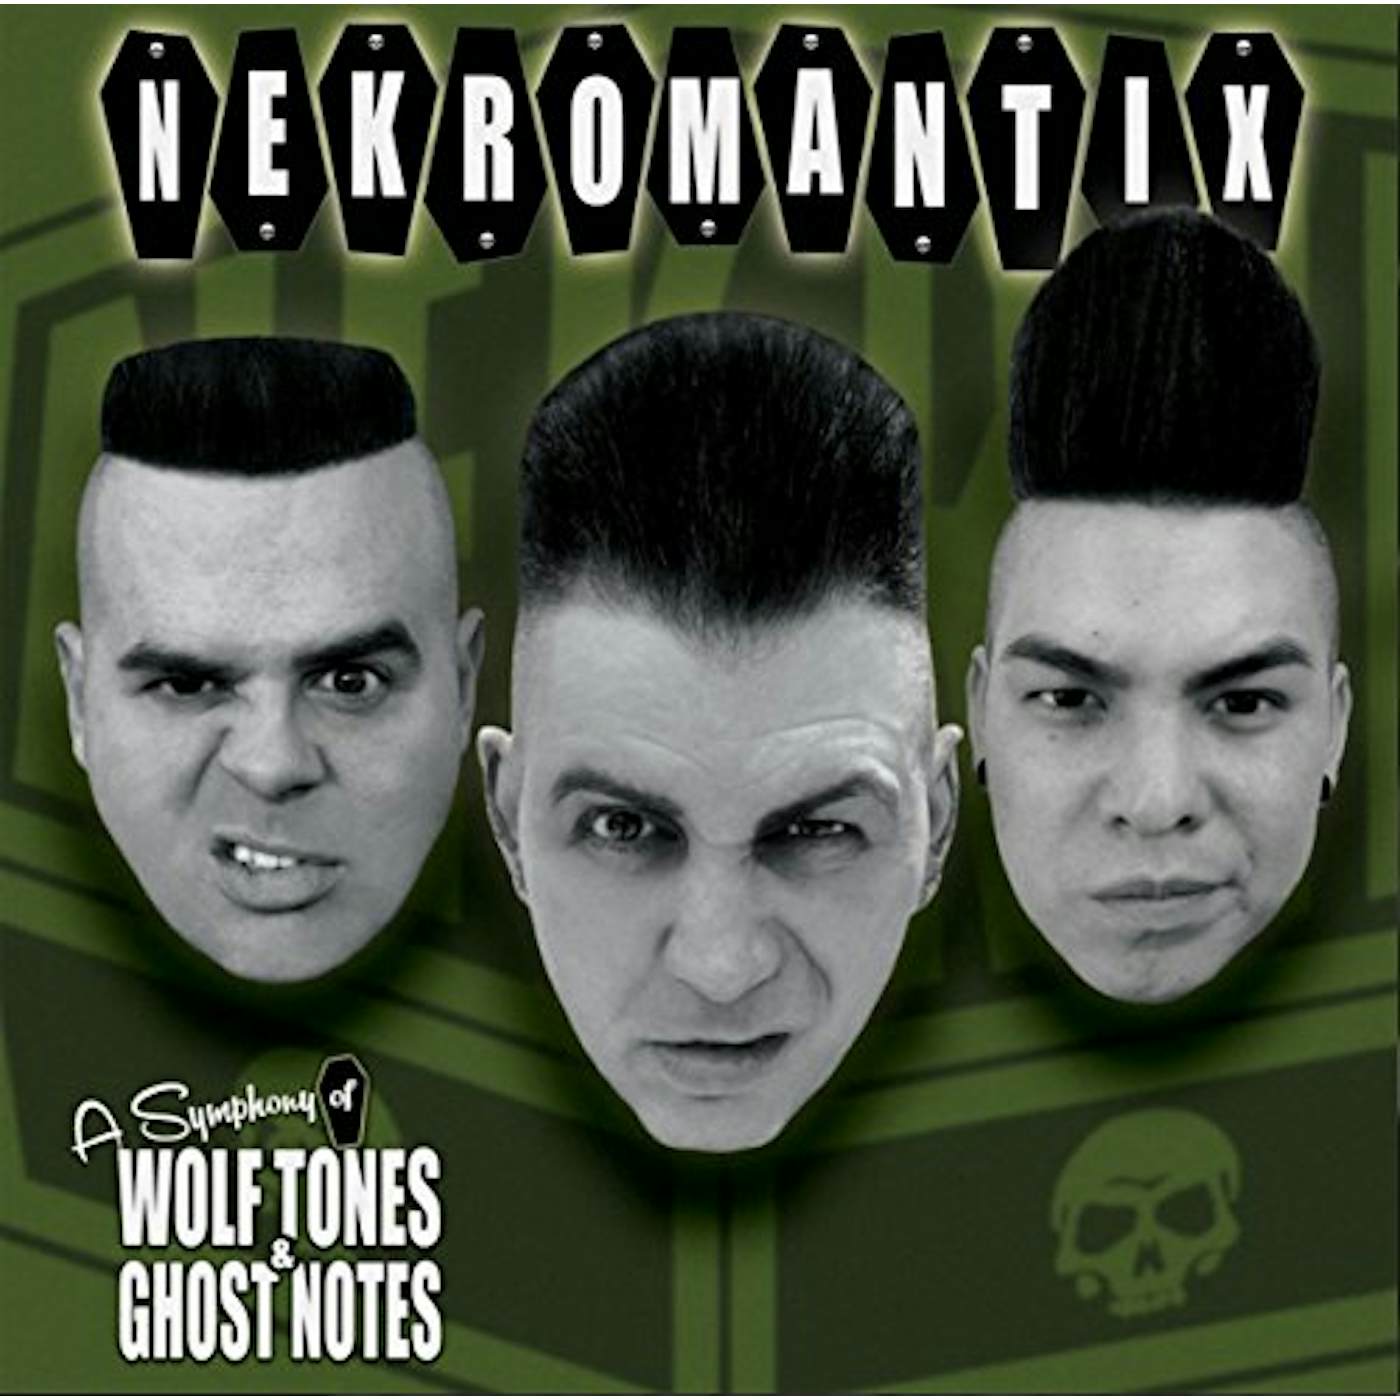 Nekromantix SYMPHONY OF WOLF TONES & GHOST NOTES Vinyl Record